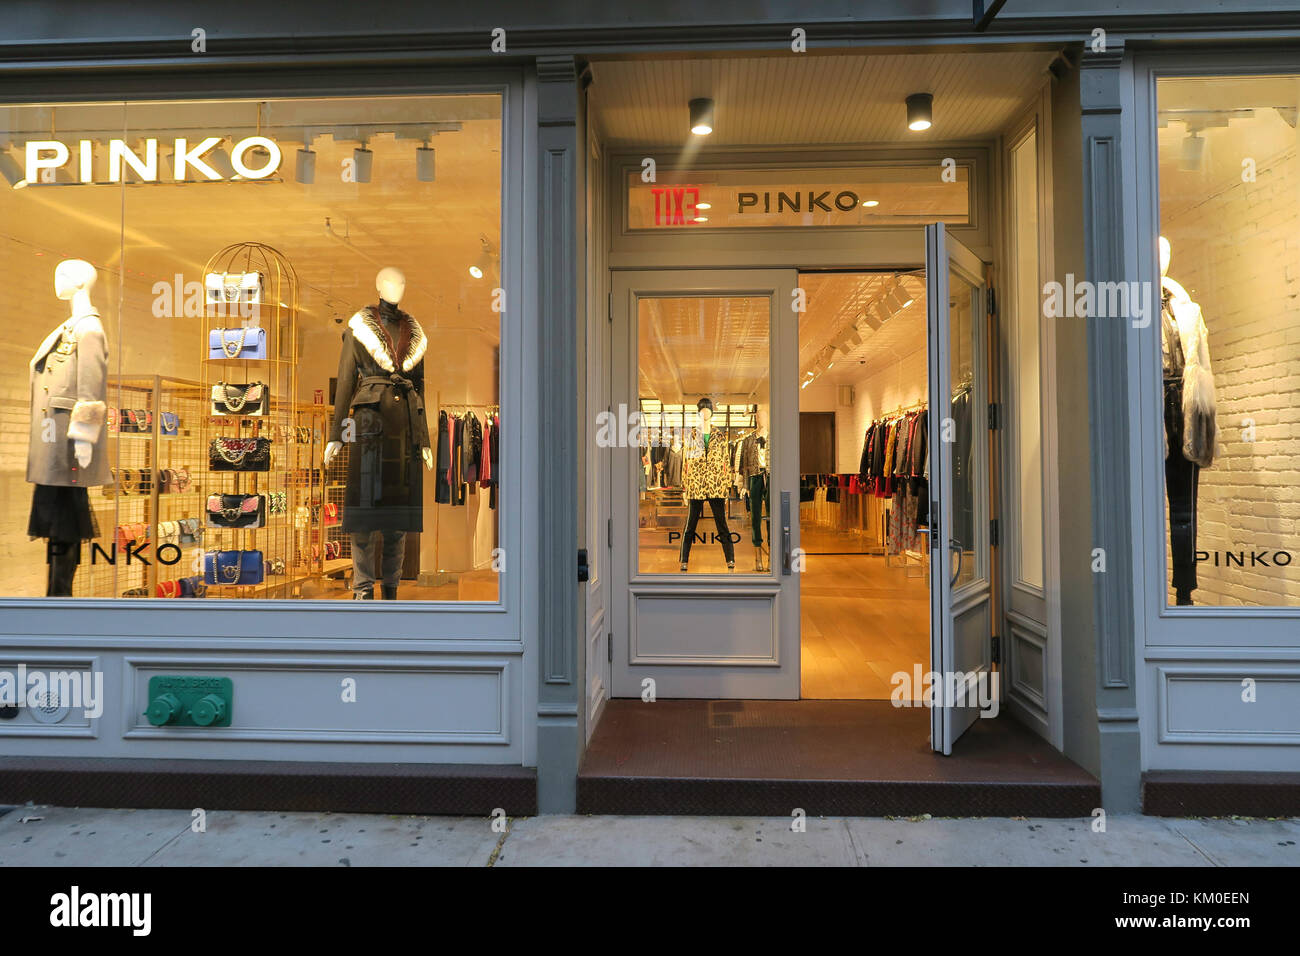 Pinko Storefront and Window Display in SoHo, NYC, USA Stock Photo - Alamy